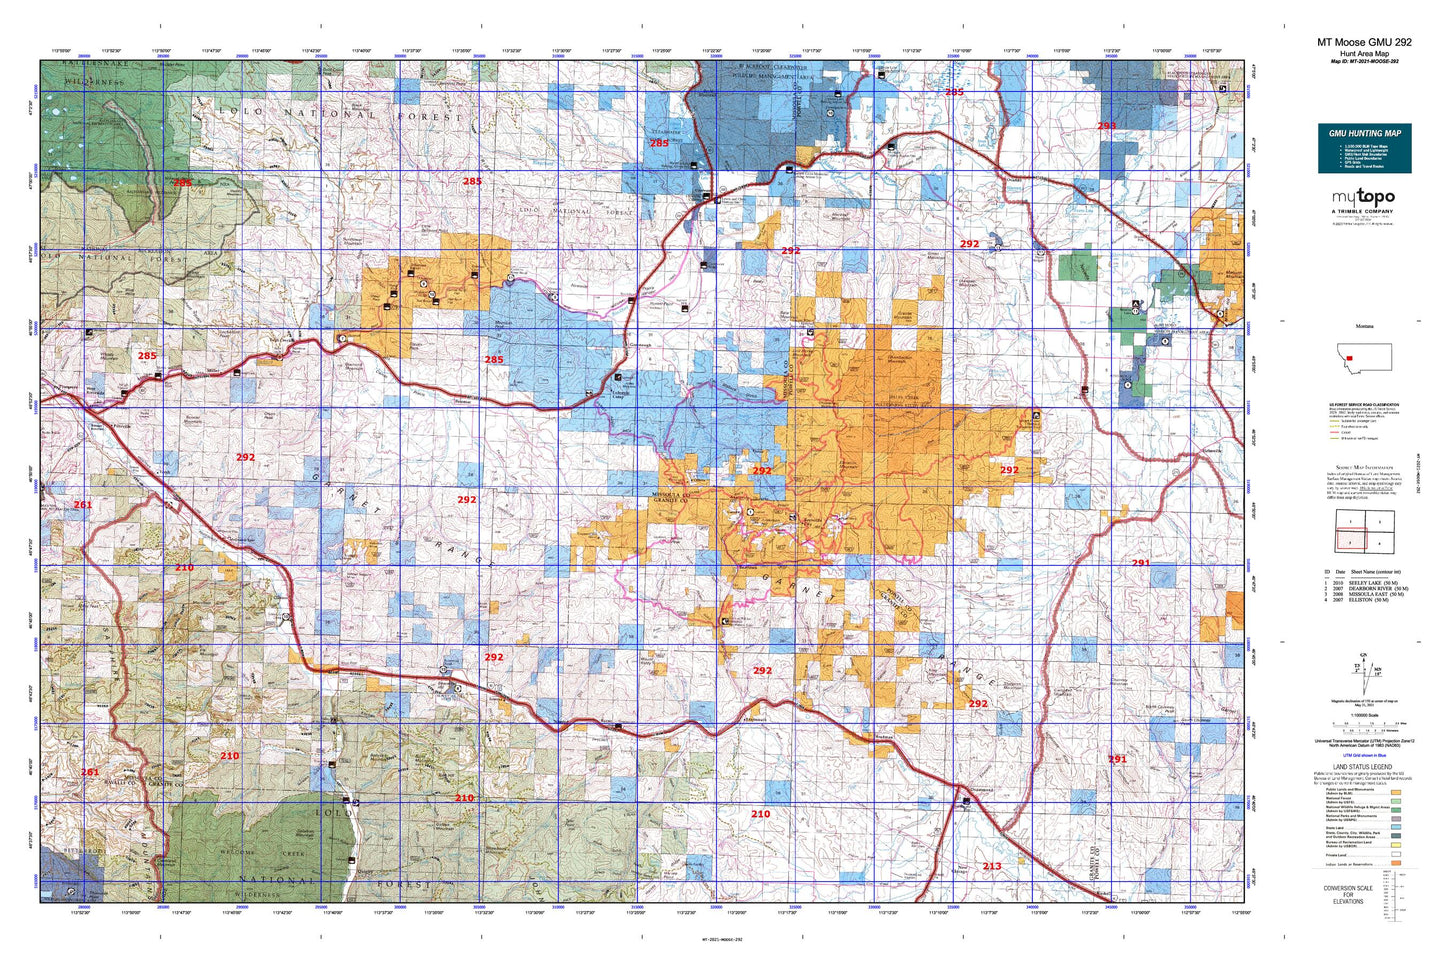 Montana Moose GMU 292 Map Image